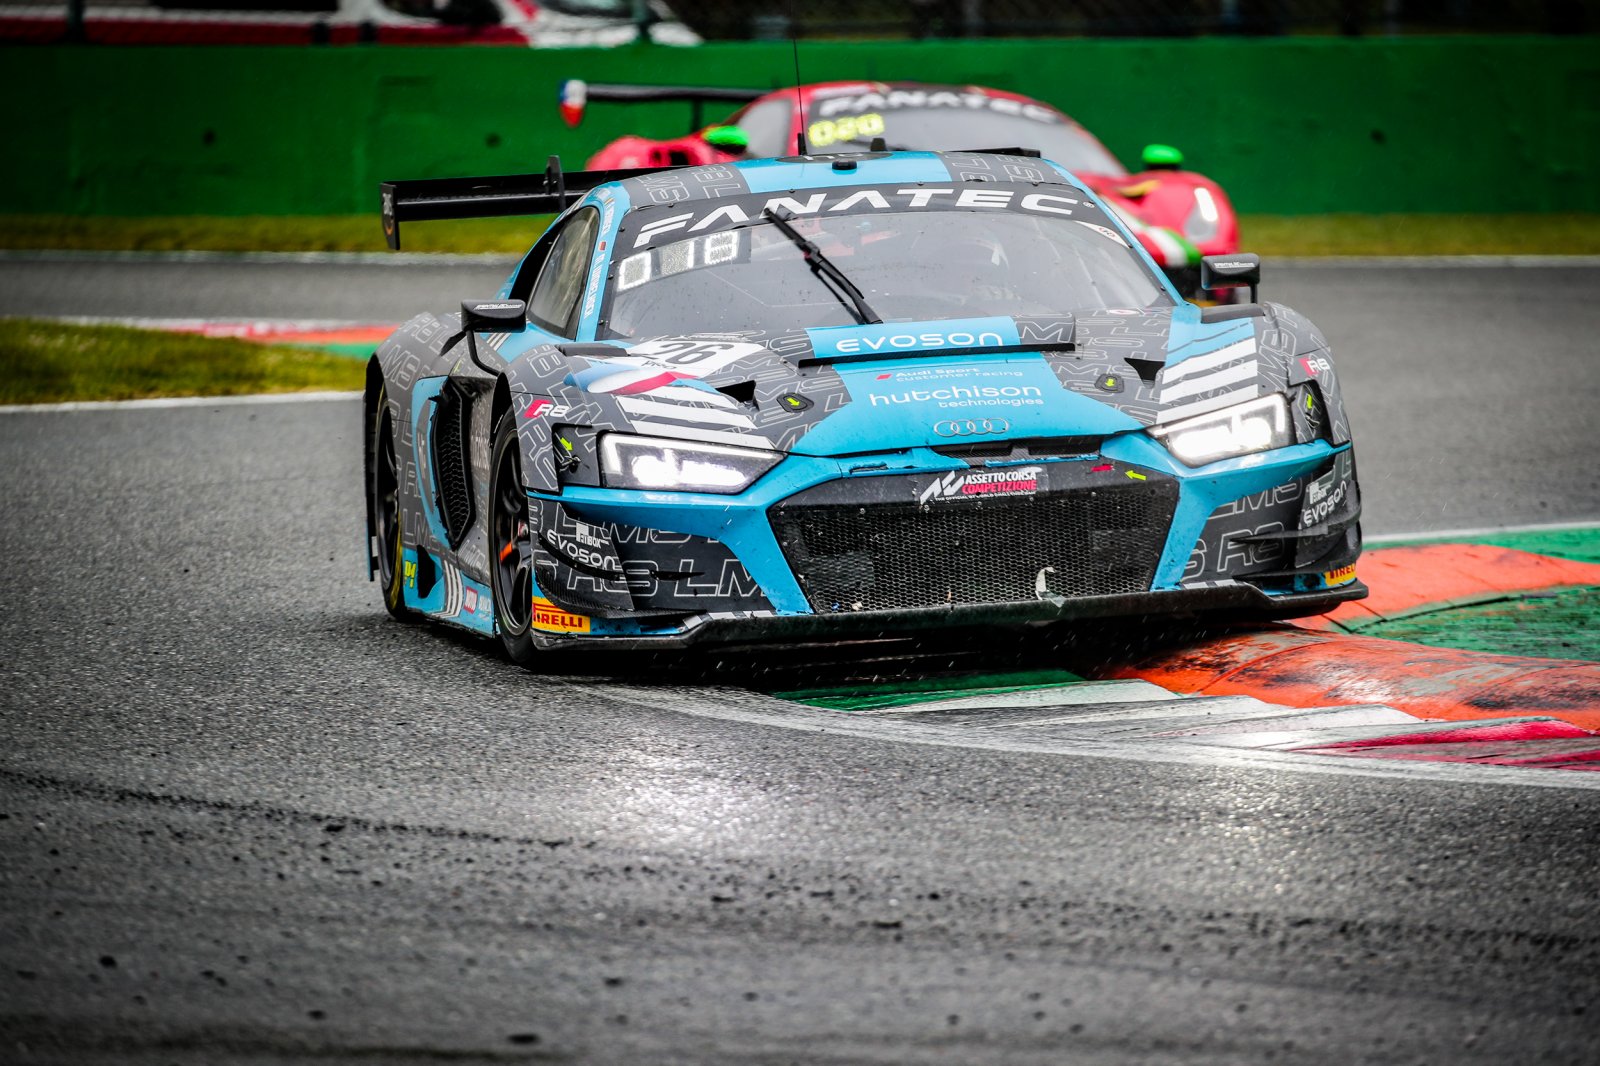 Sprint Cup grid grows to 30 cars as Saintéloc Racing adds third Audi for Misano